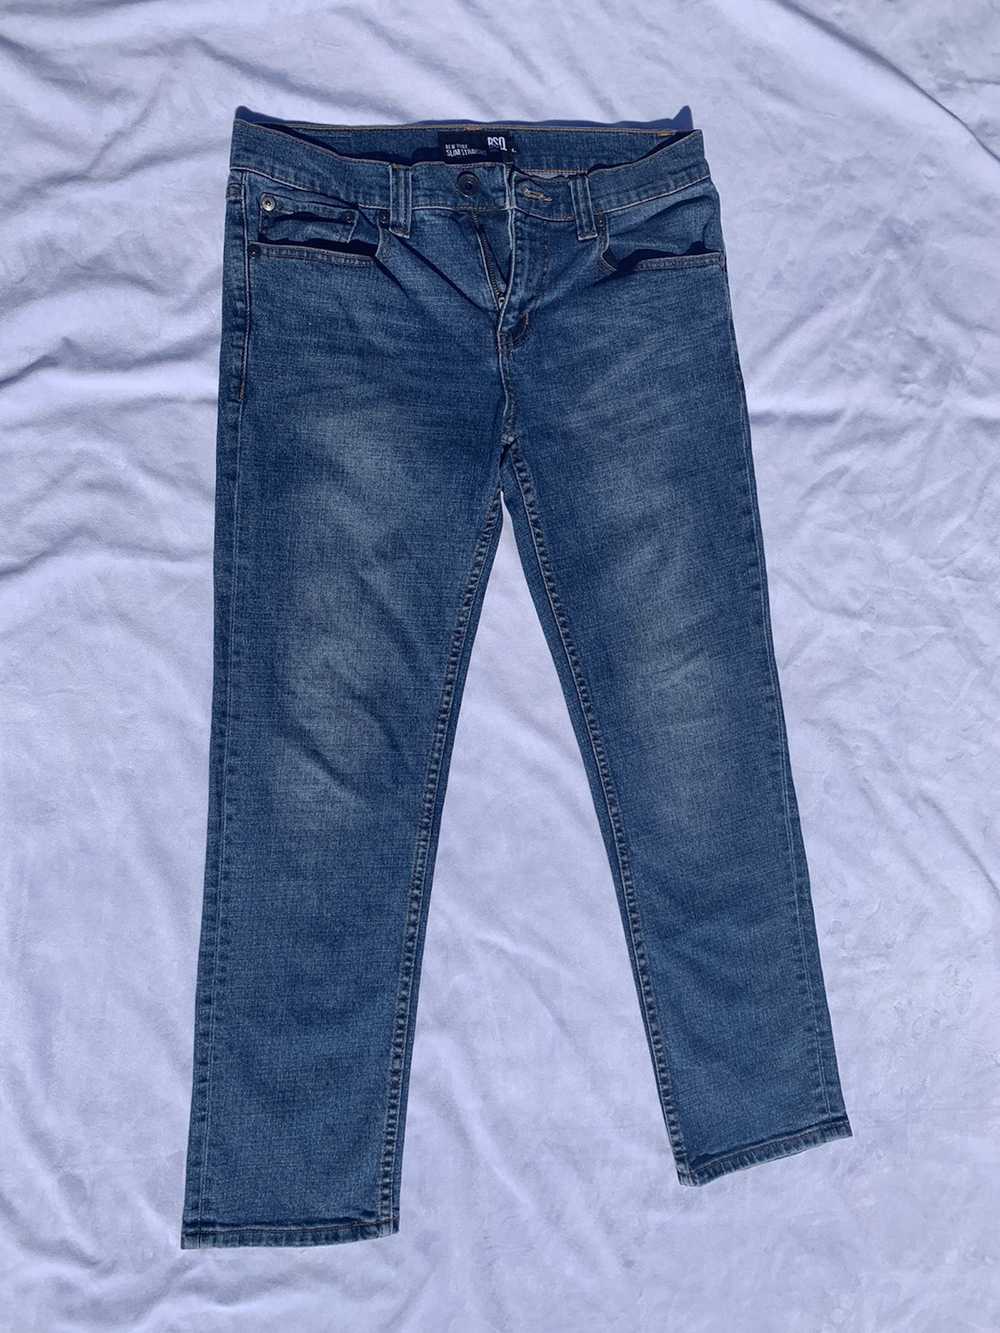 Rsq RSQ Mens Slim Straight Jeans - image 1